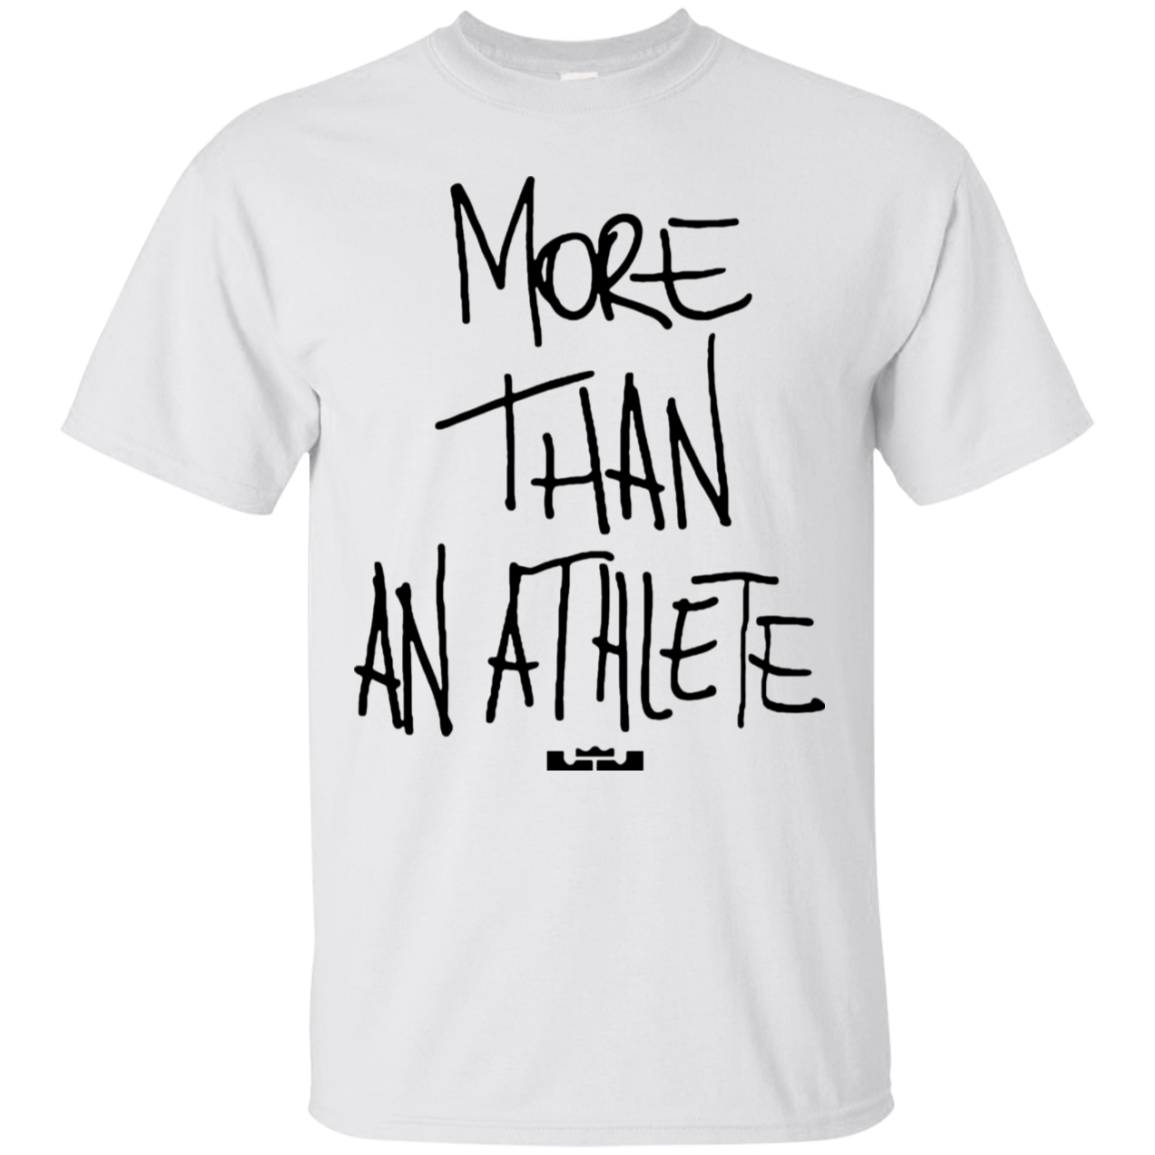 more than an athlete shirt